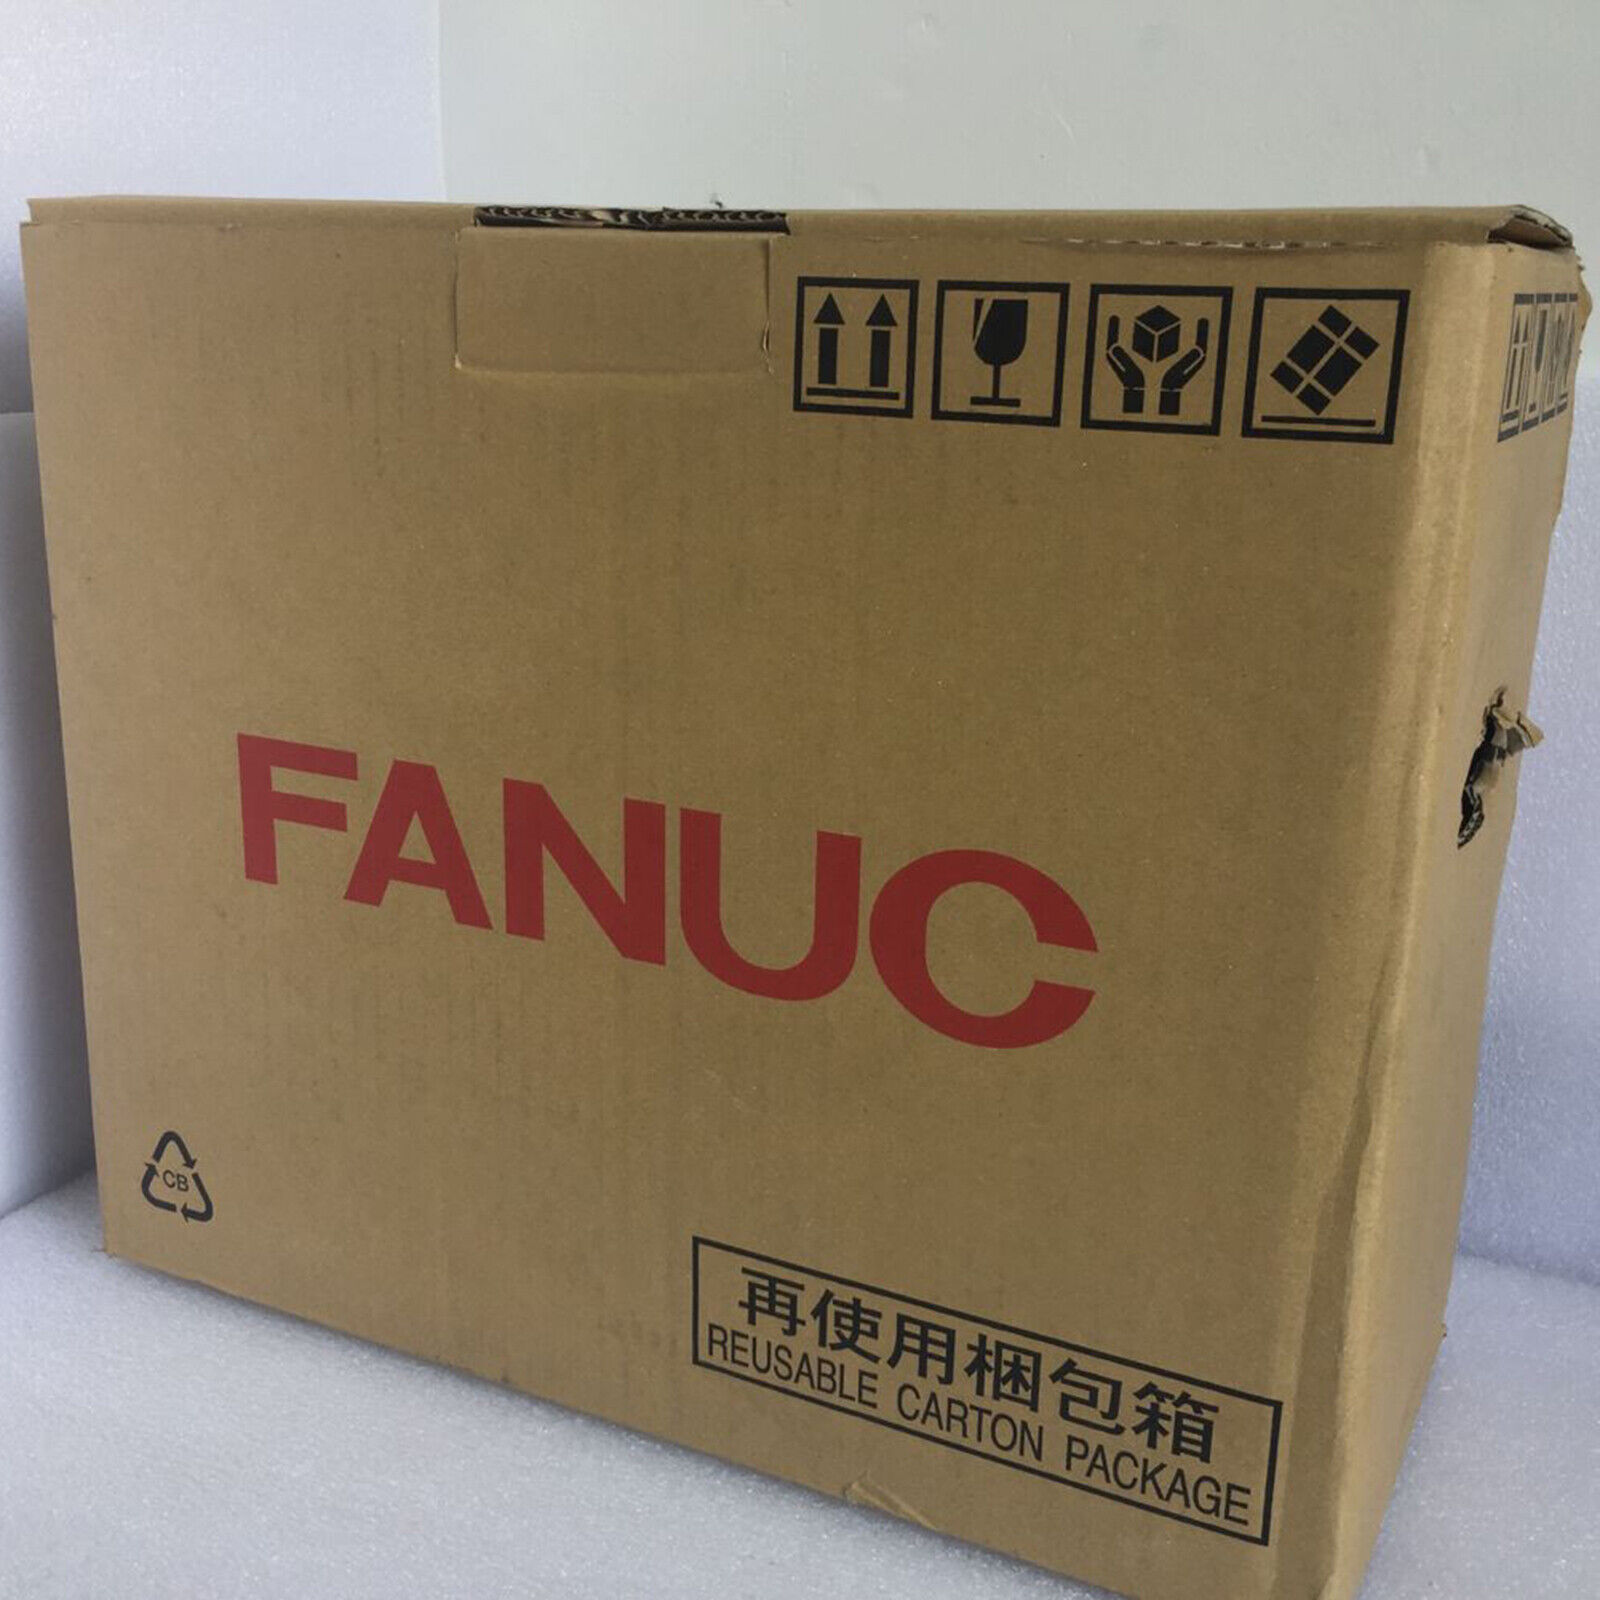 A06B-6117-H302 NEW Fanuc Servo Drive Amplifier A06B-6117-H302 Via FedEx or DHL